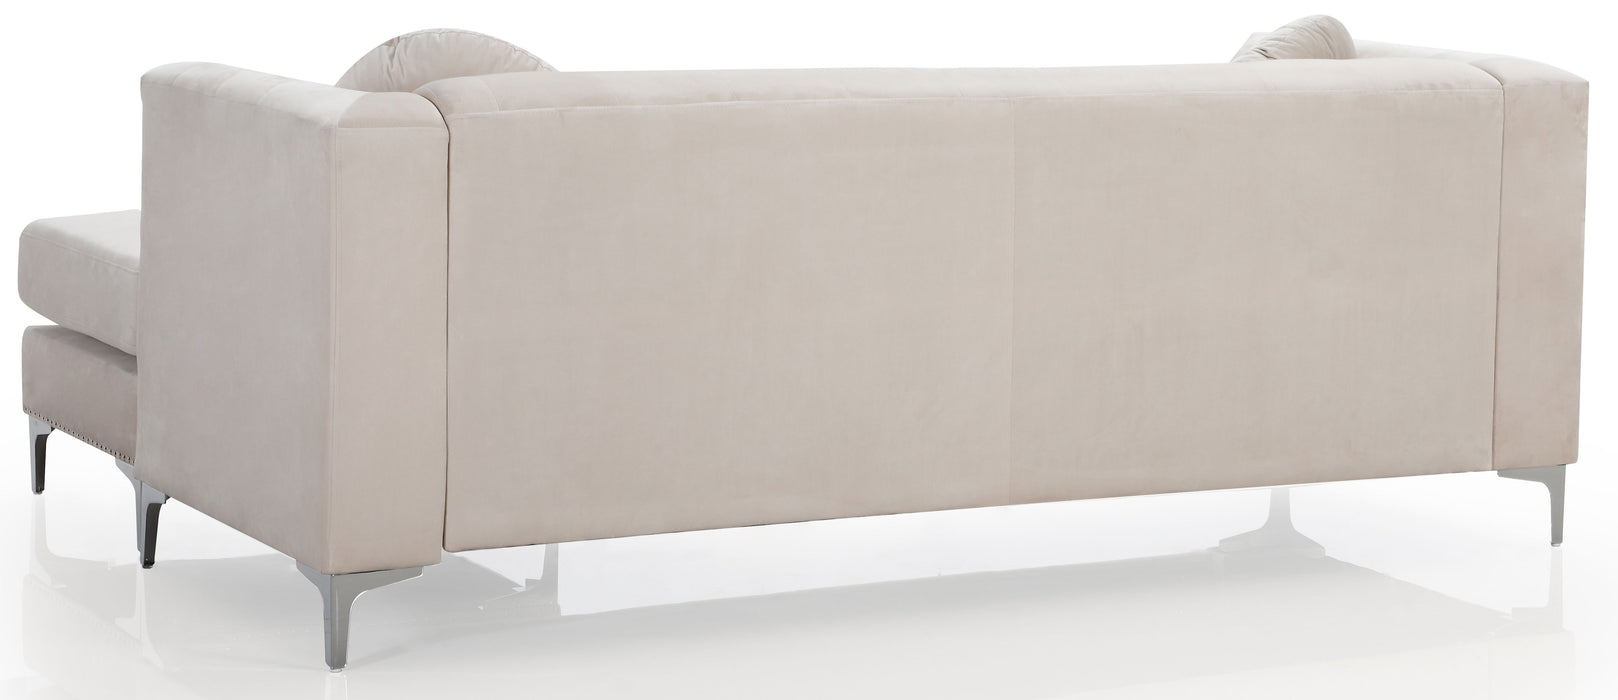 Glory Furniture Pompano Sofa Chaise (3 Boxes), Ivory